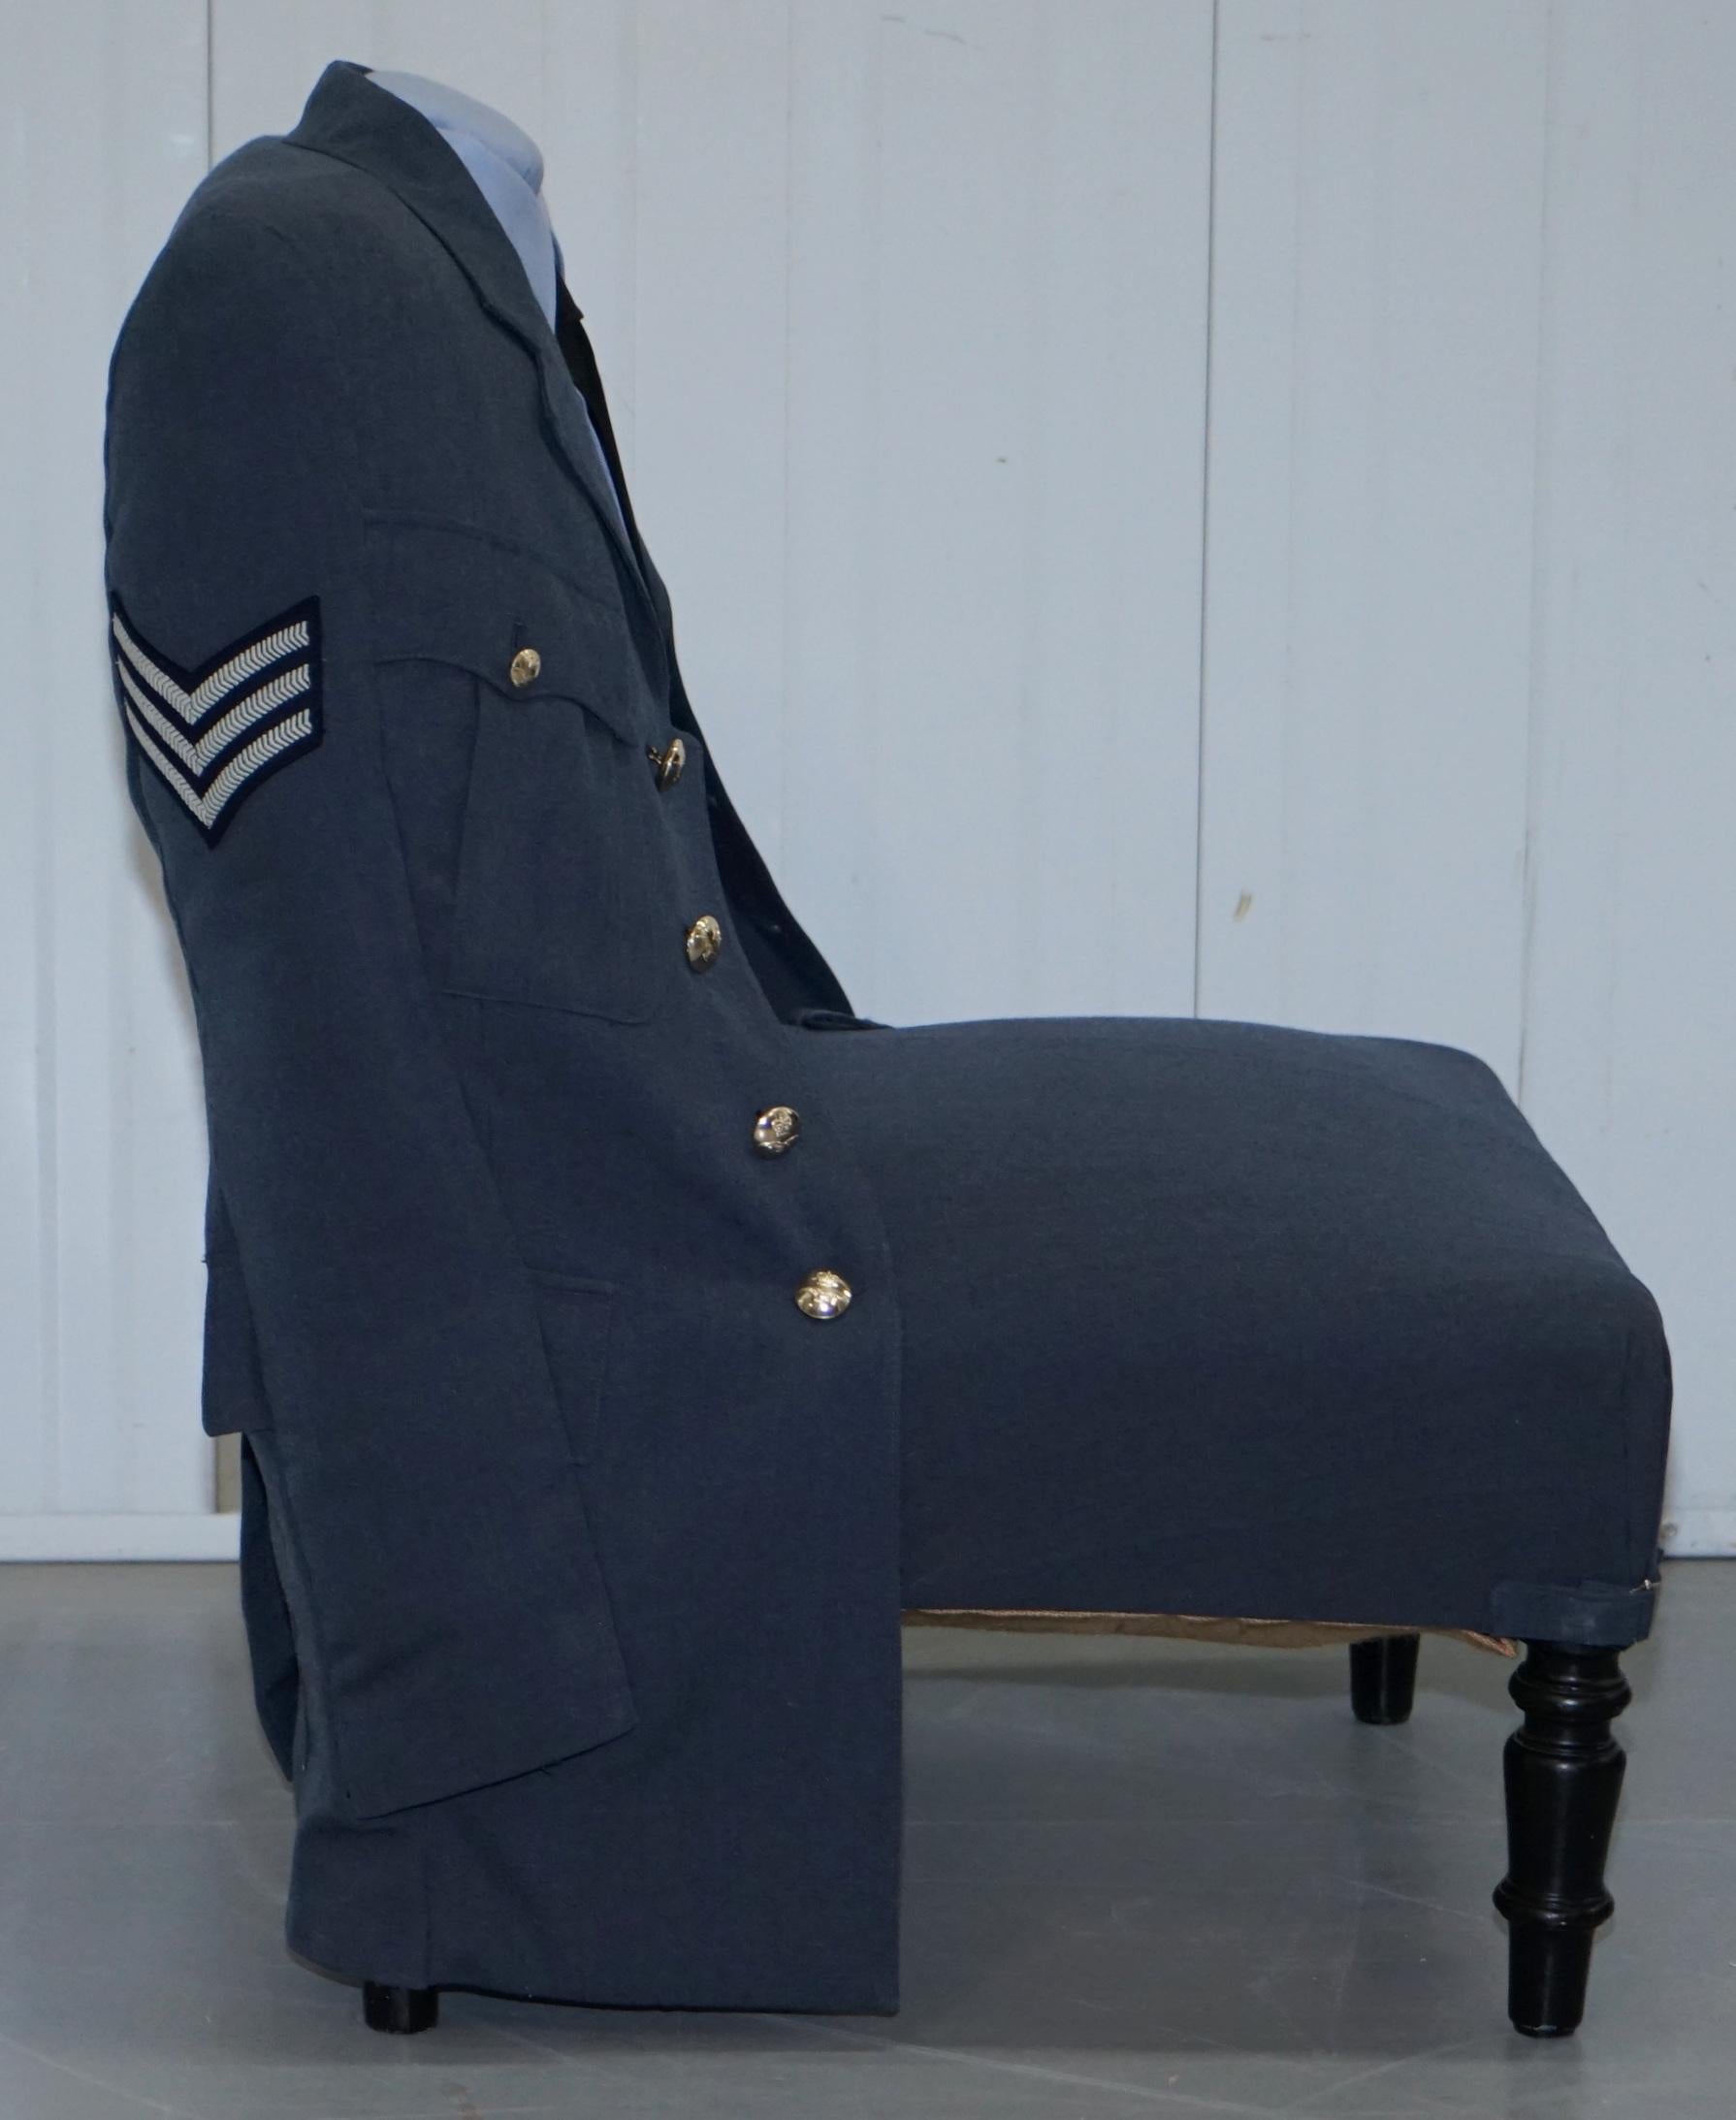 Treniq the Royal Air Force RAF Uniform Armchair Rare Unique Find For Sale 4